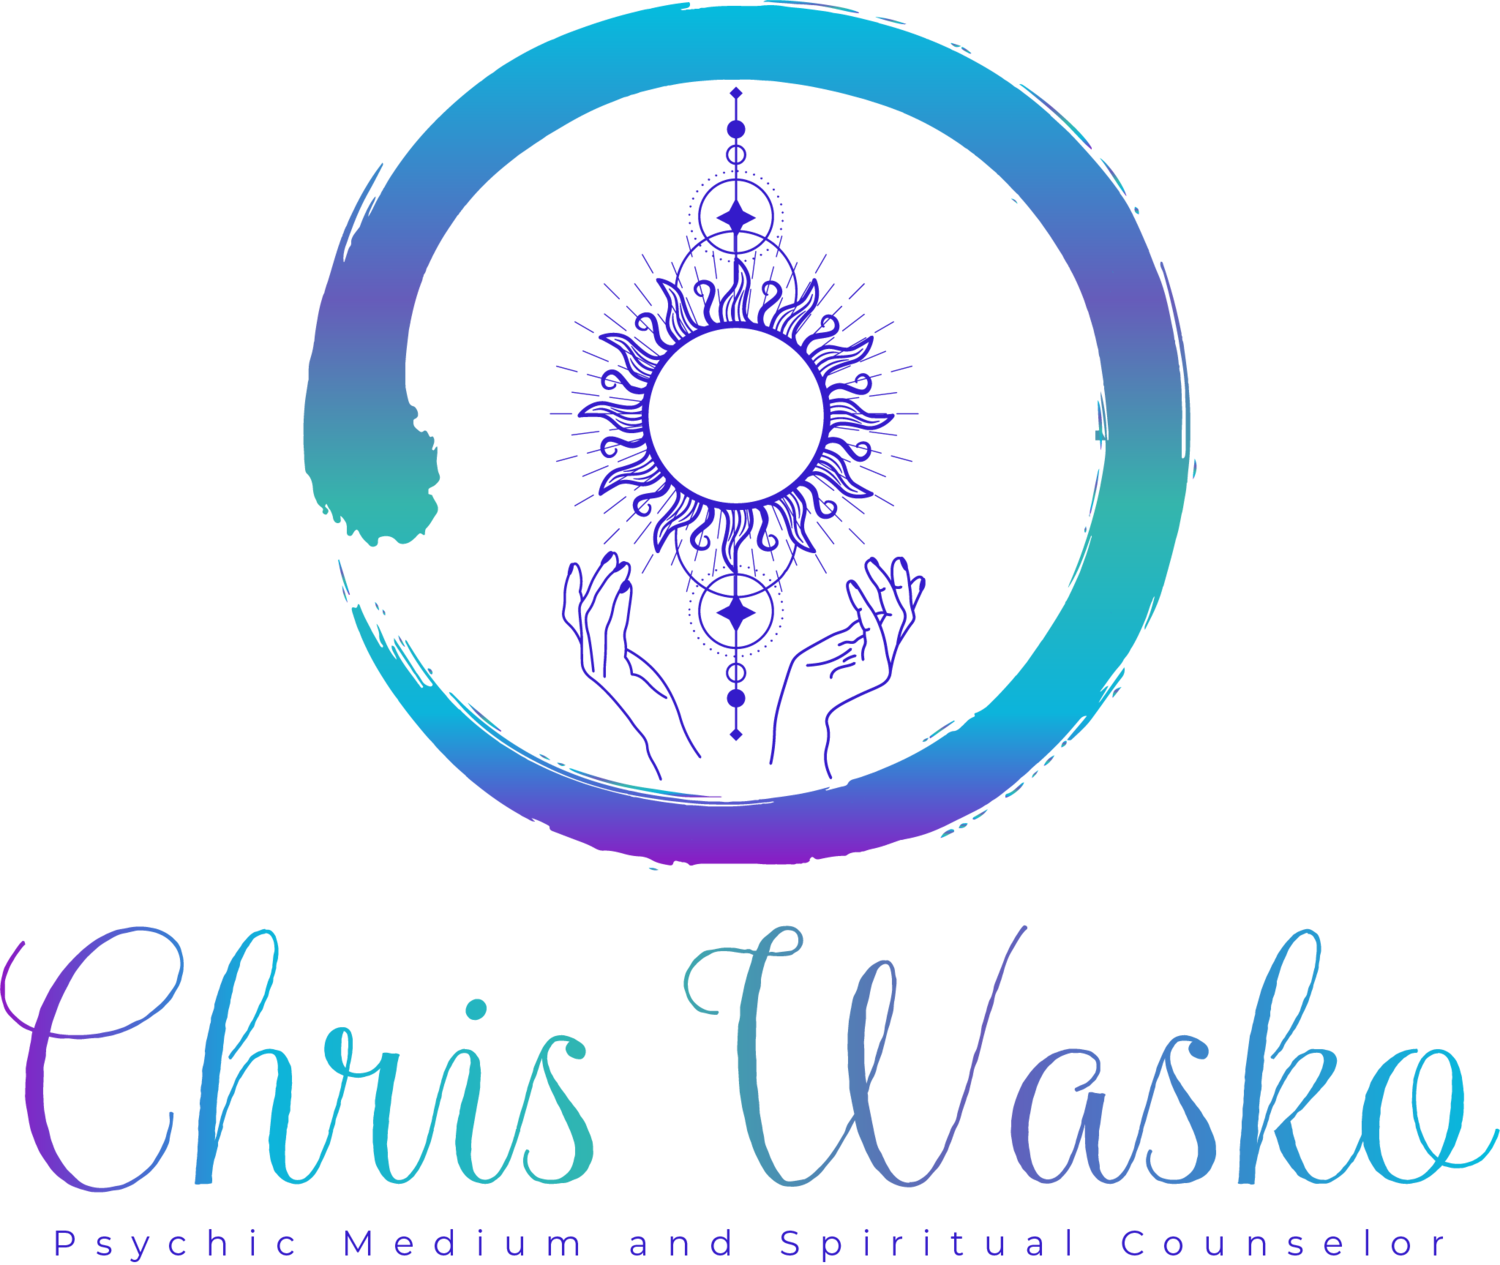 Chris Wasko Psychic Medium and Spiritual Counselor